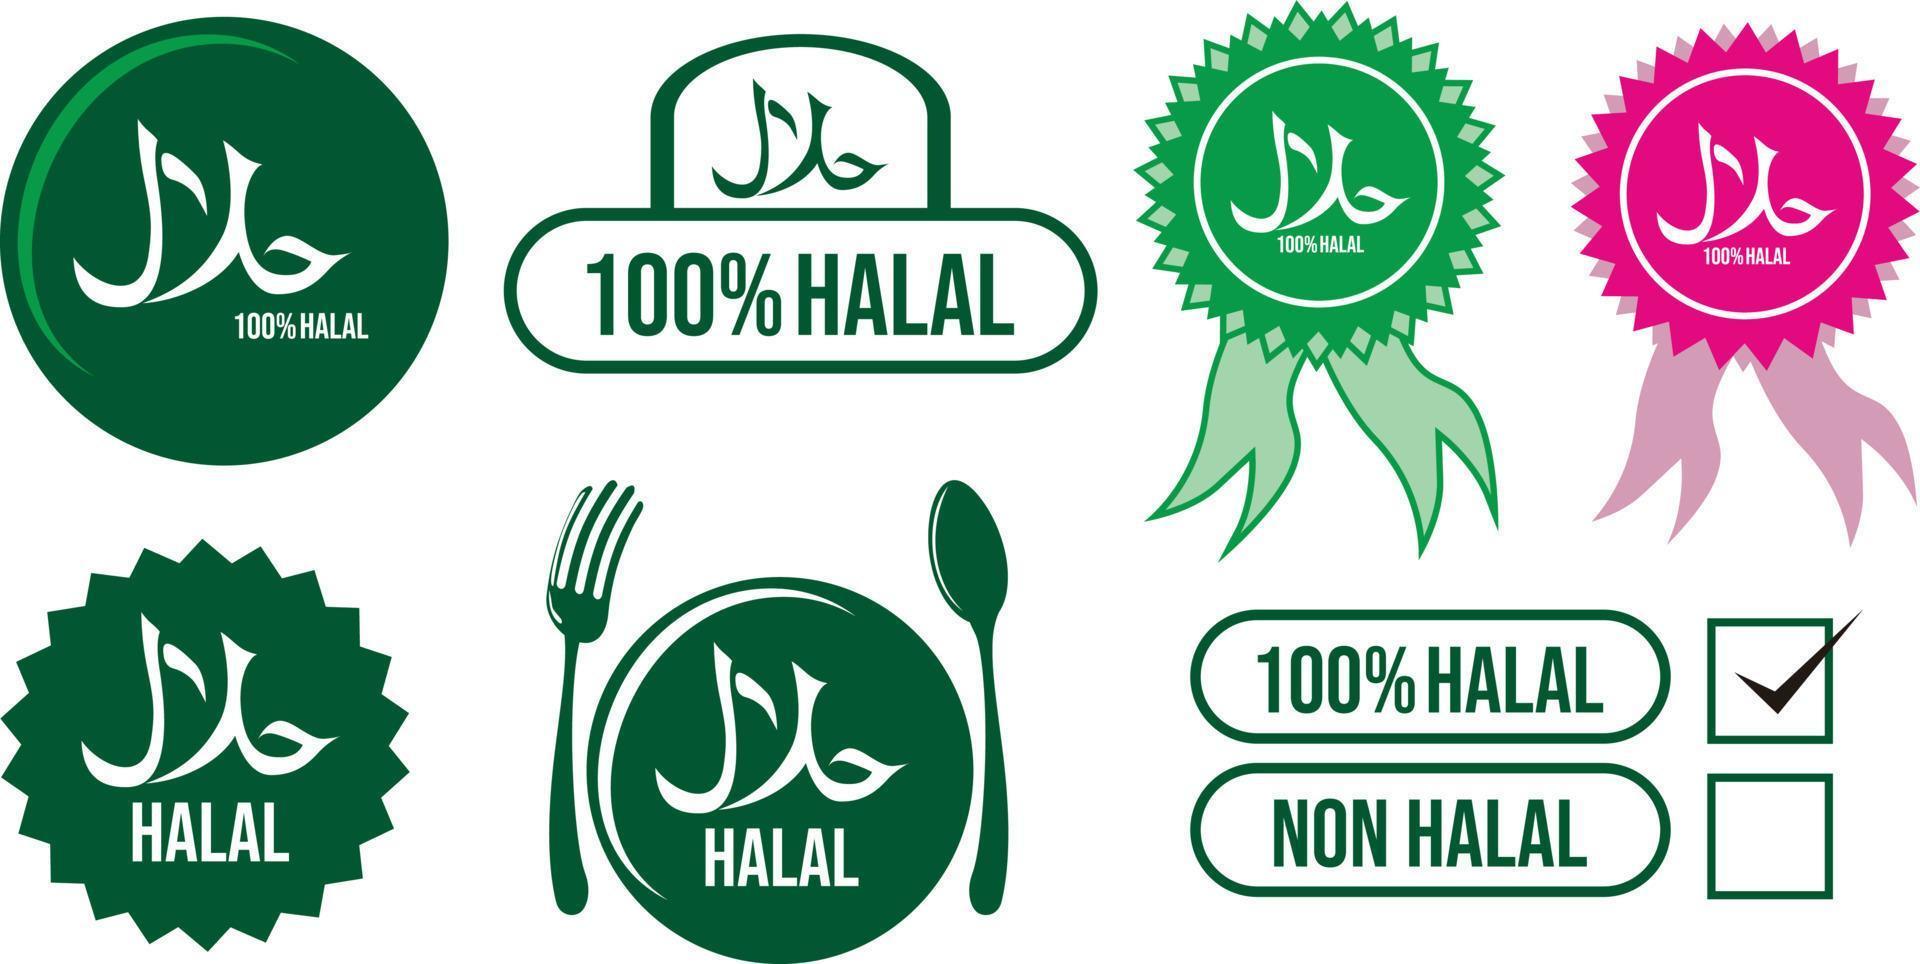 Halal logo vector badge image illustrations